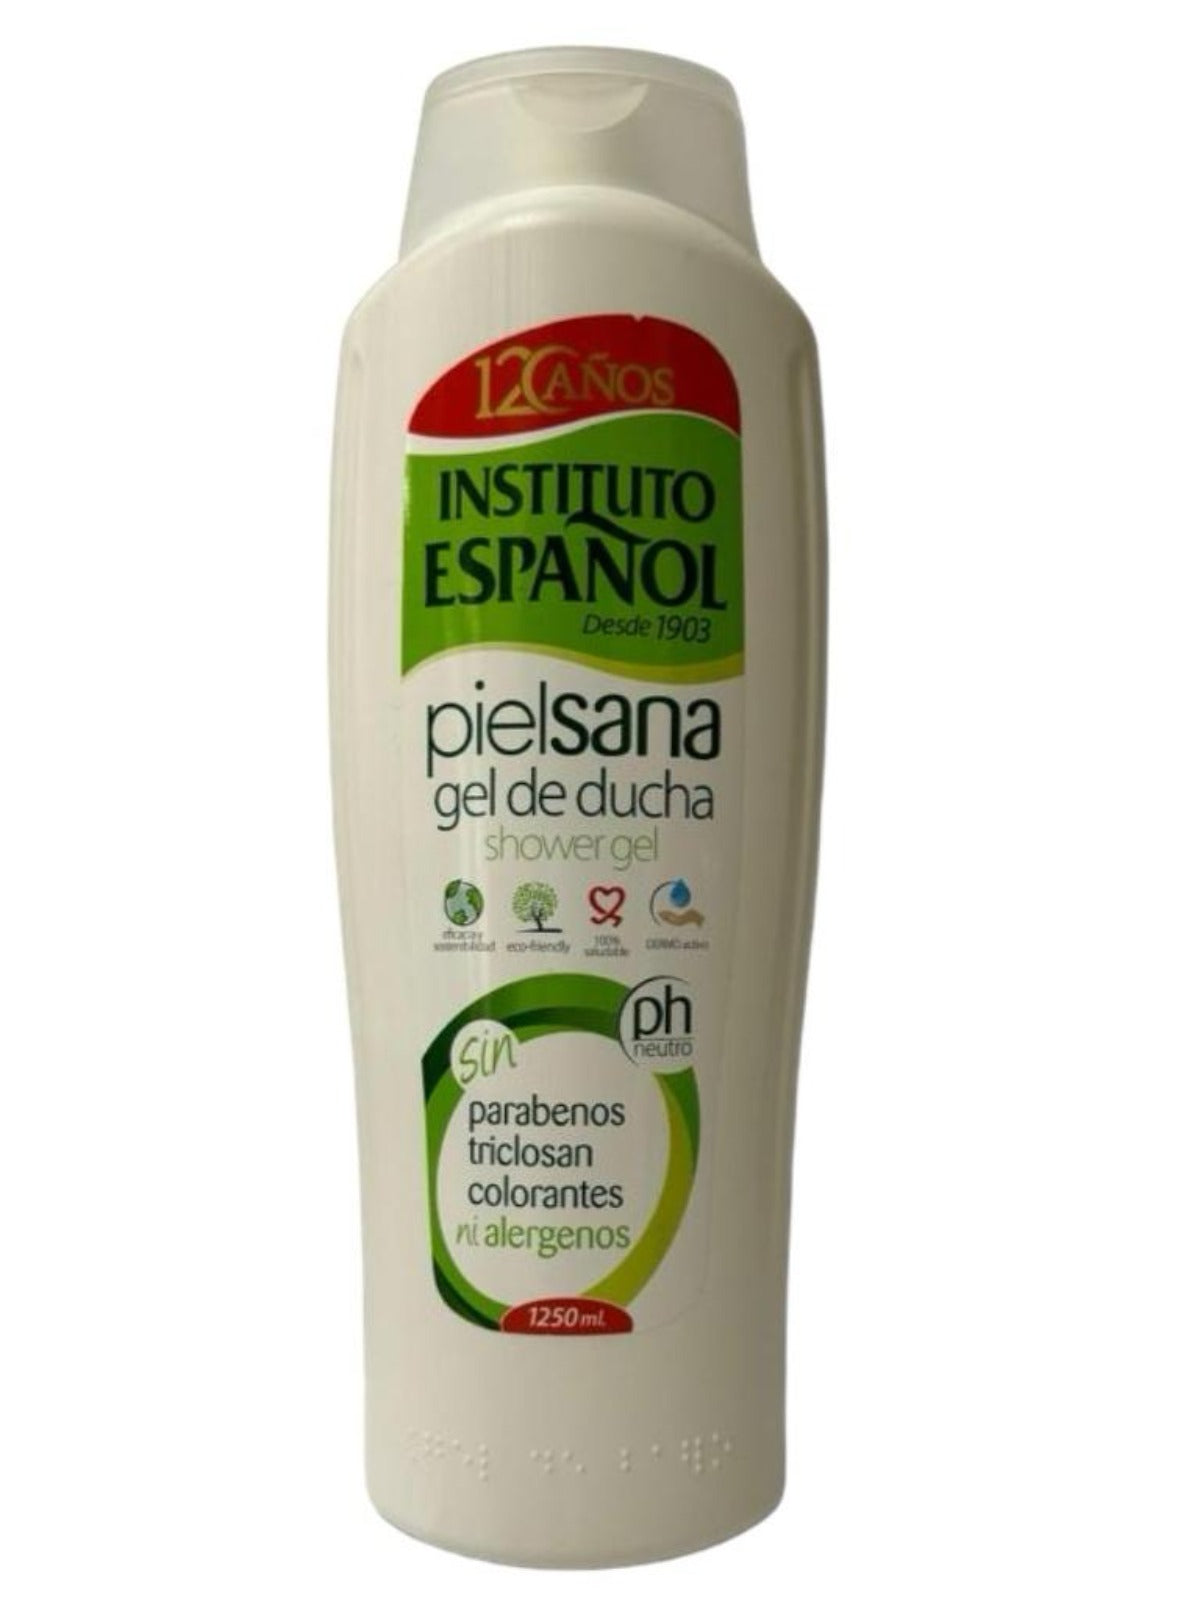 Instituto Espanol Piel Sana Body Soap 1250ml